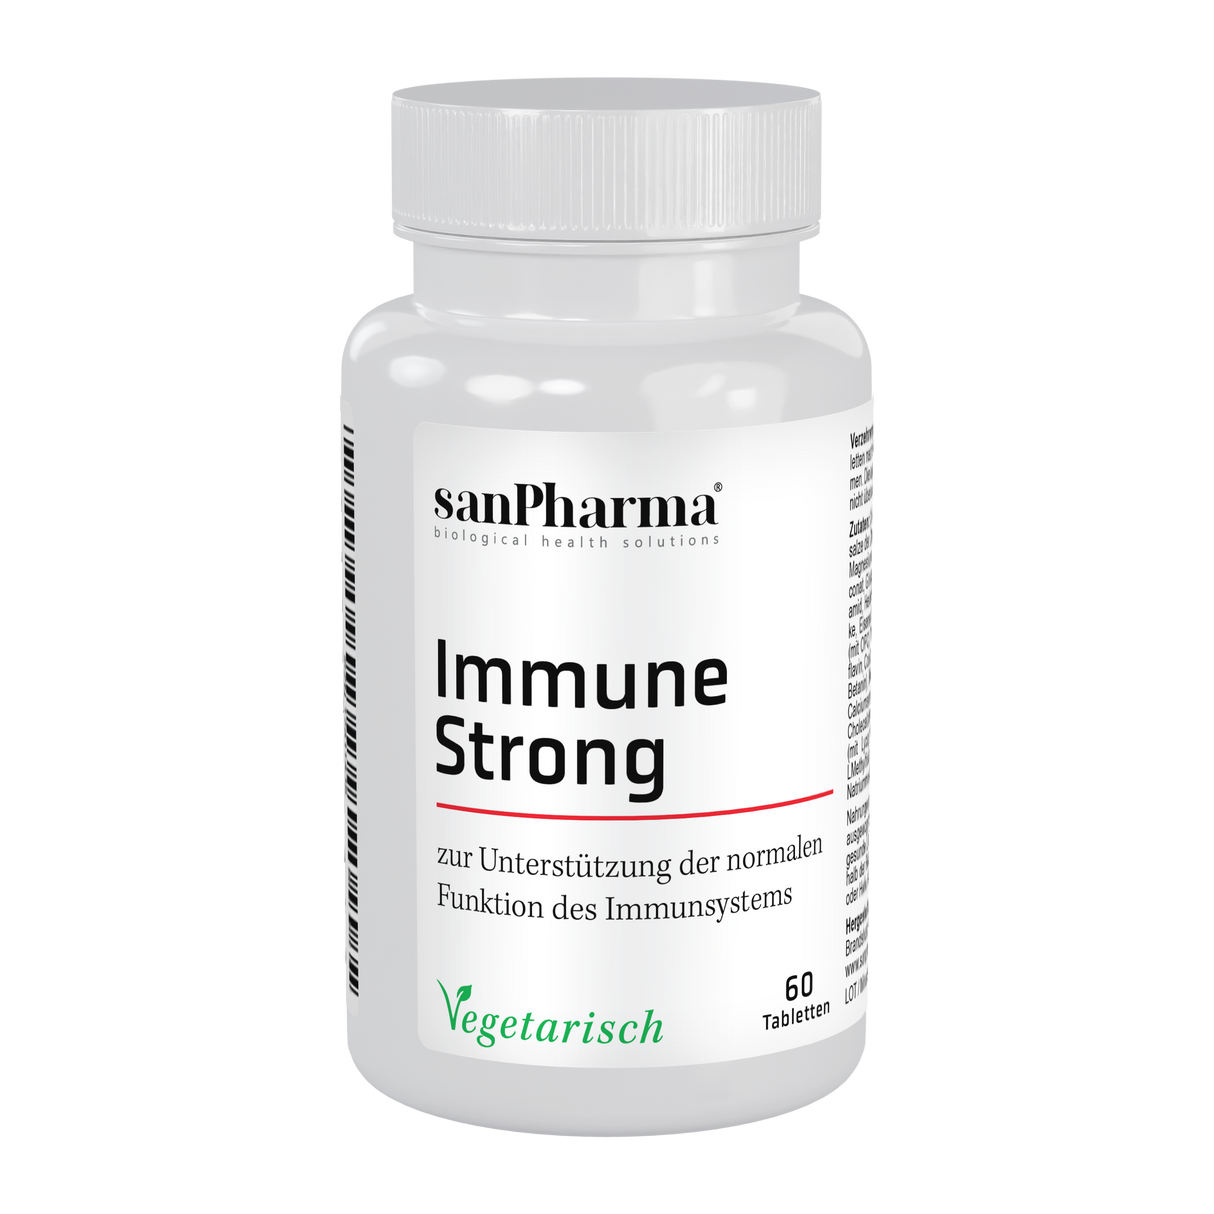 Immune Strong